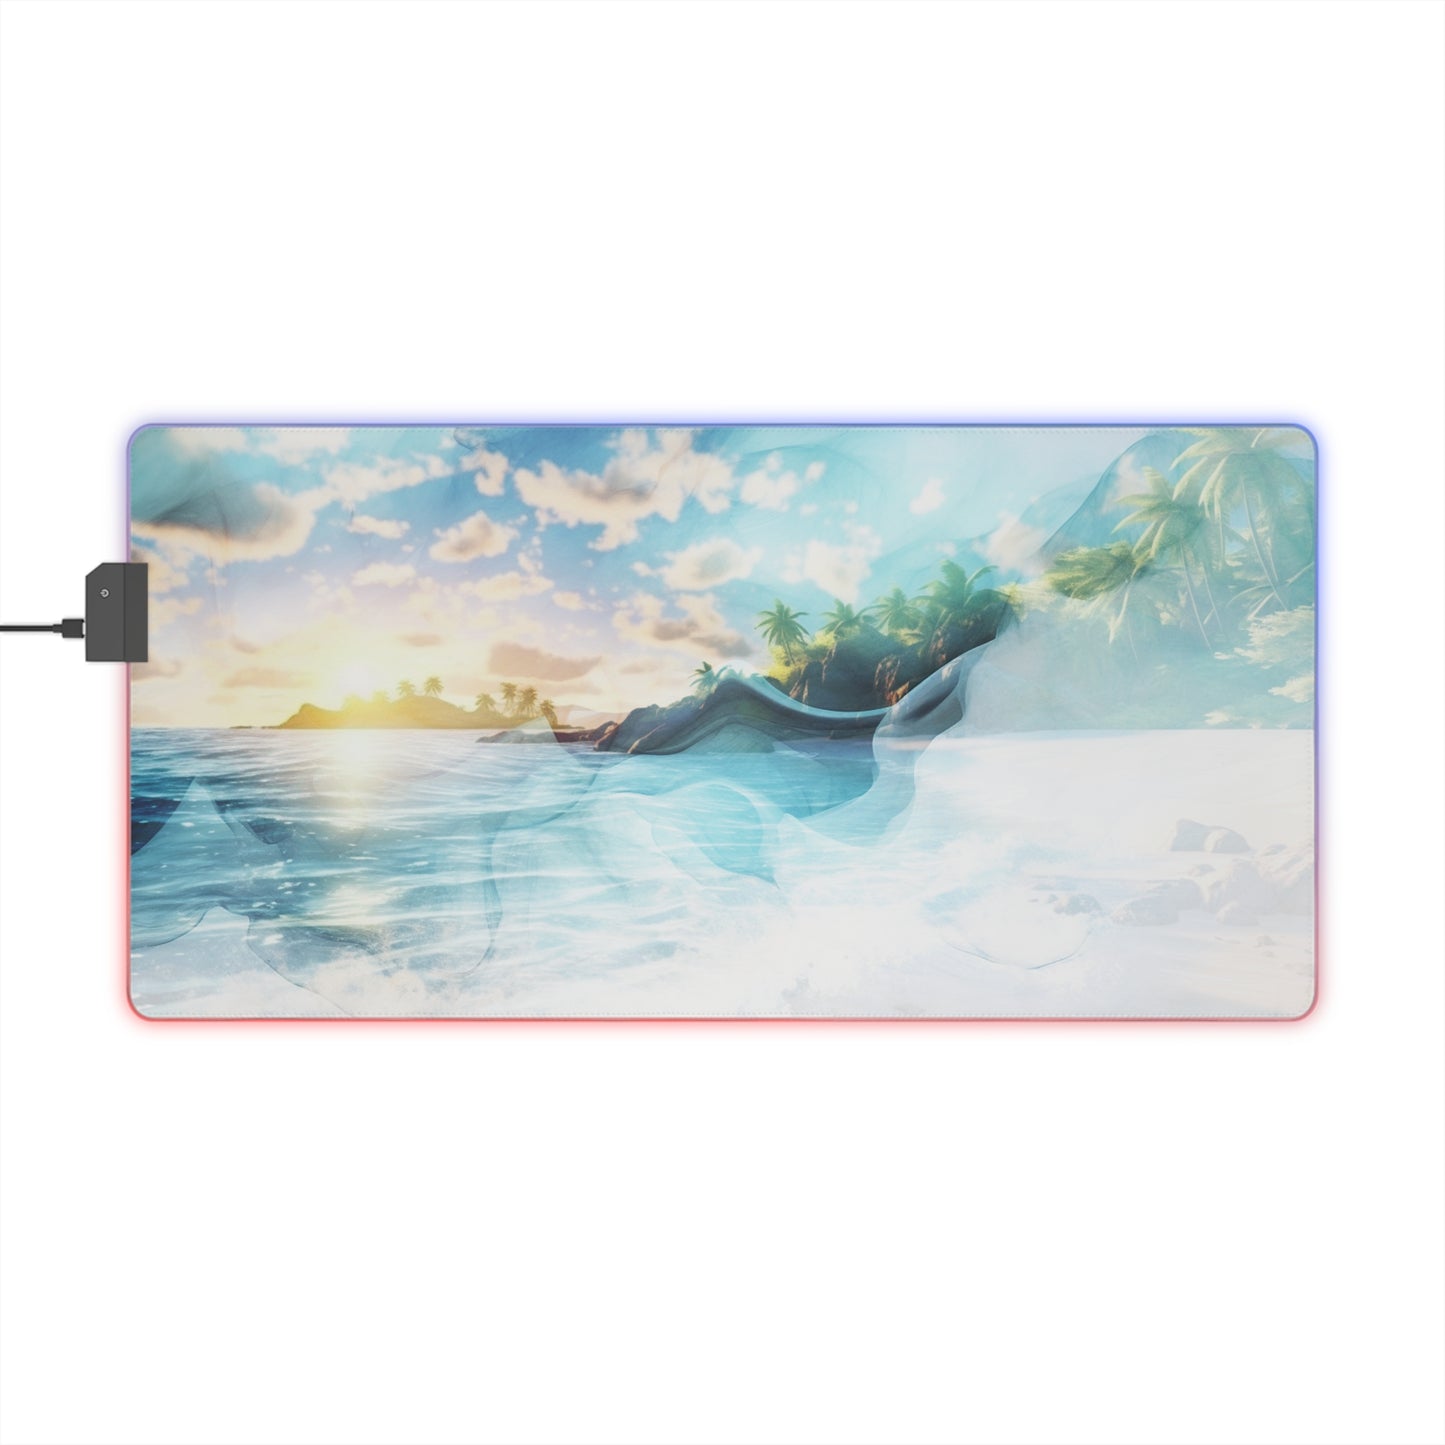 Dreamscape Tropical Beach LED Gaming Mouse Pad - Neduz Designs